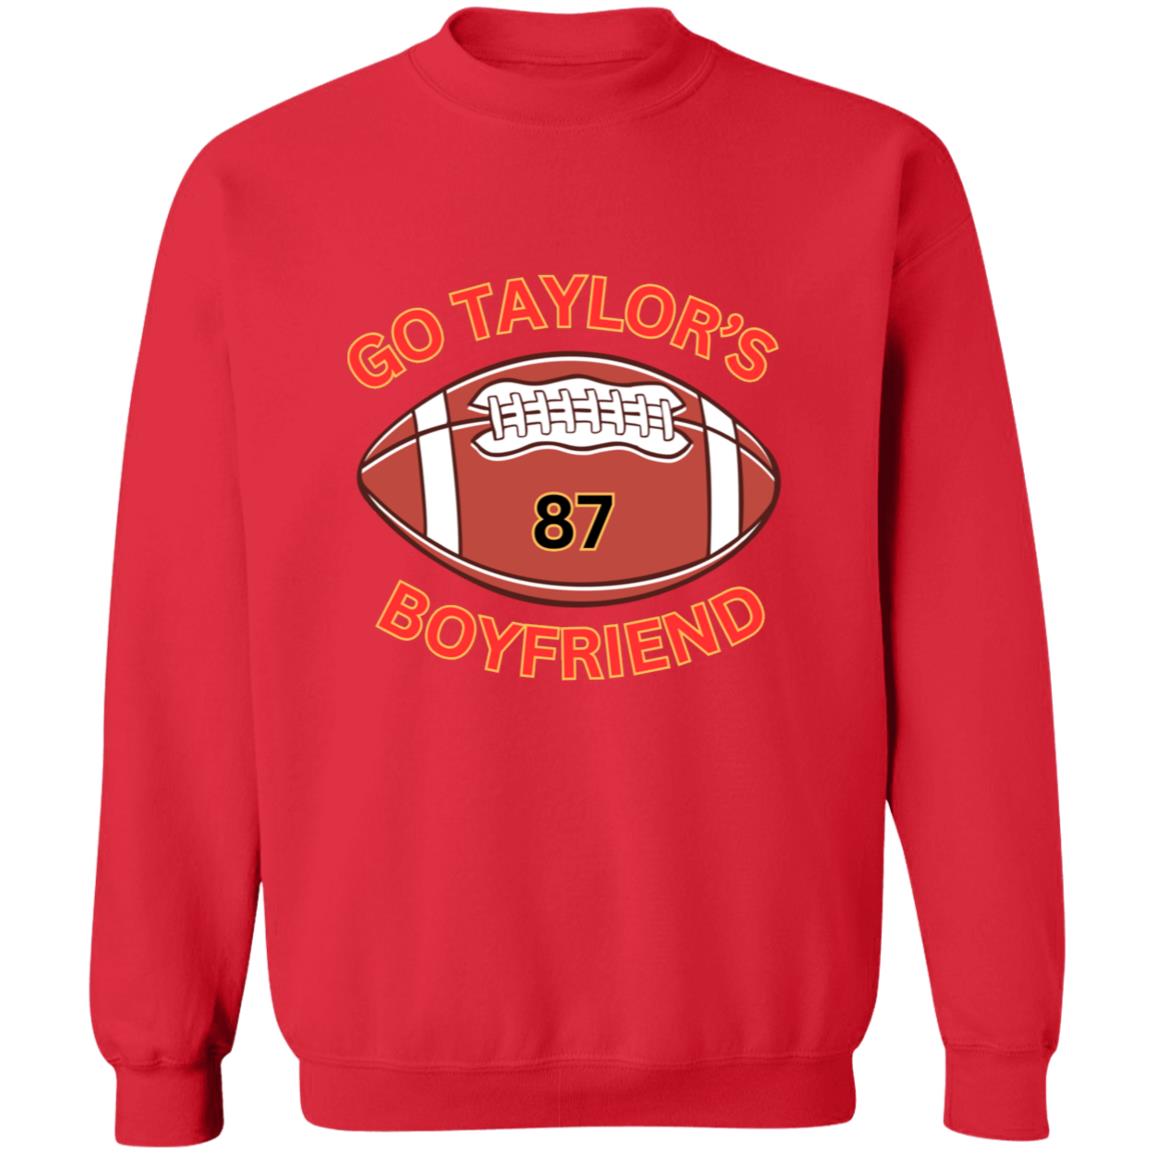 Go Taylor's Boyfriend -FOOTBALL#87 - Pullover Crewneck Sweatshirt